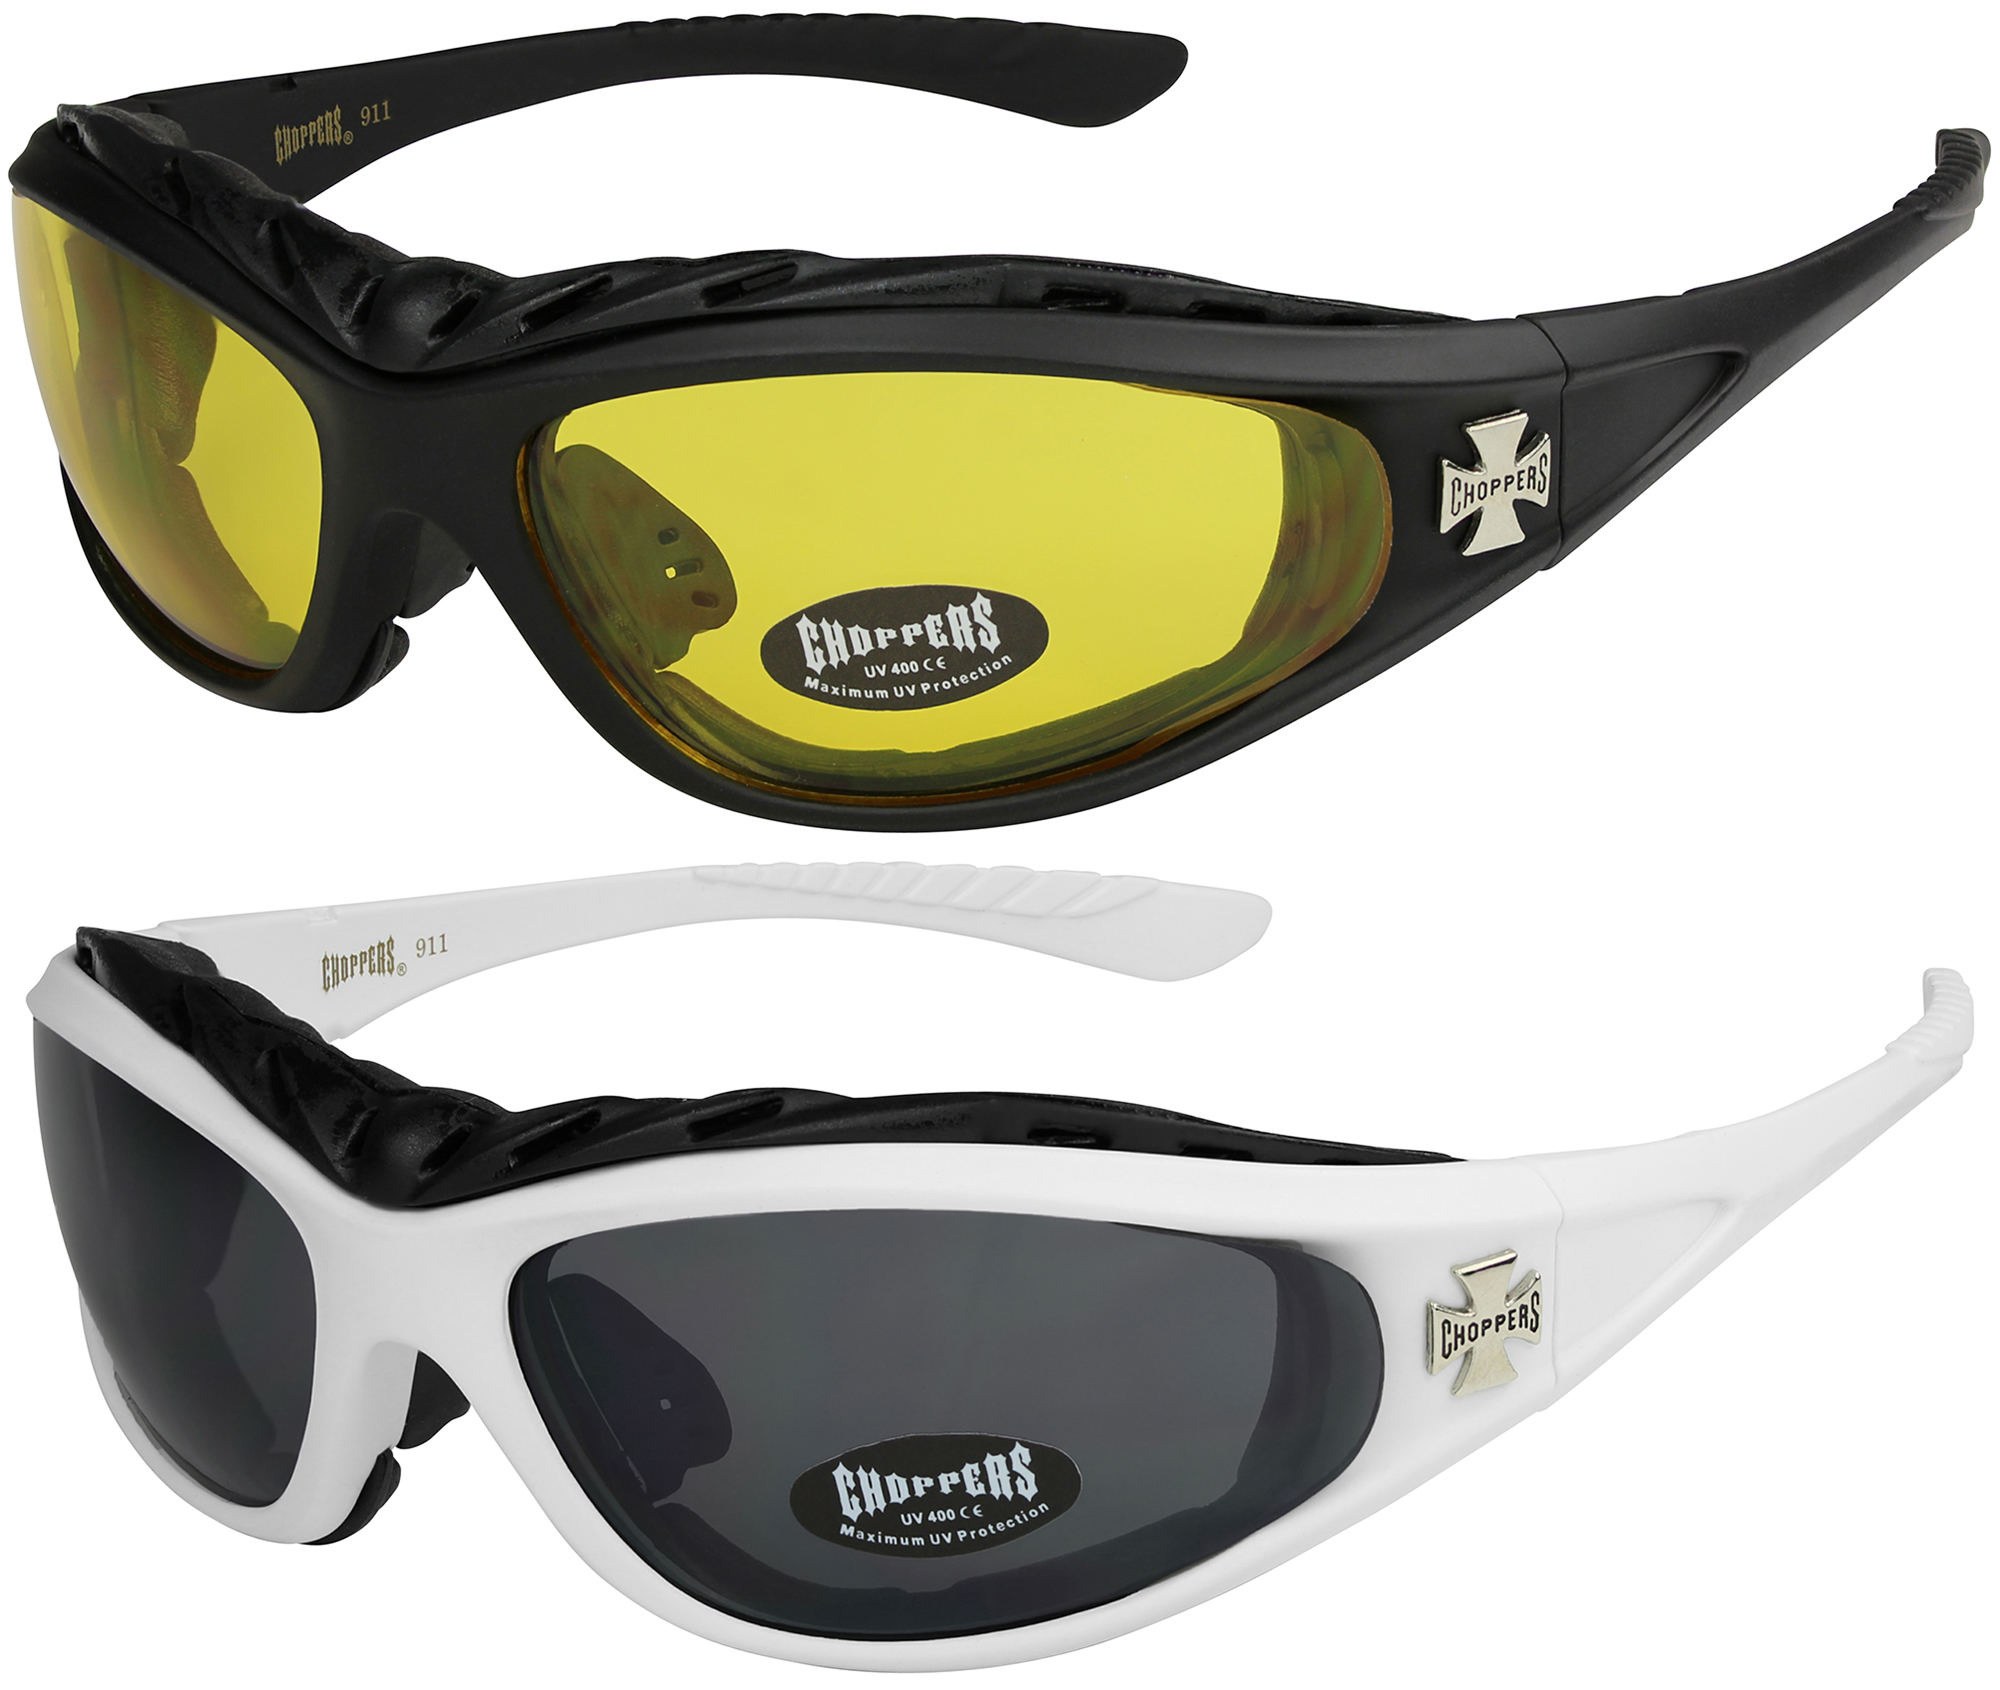 2er Pack Choppers 911 Locs Motorradbrille gelbe Gläser Männer Frauen schwarz 